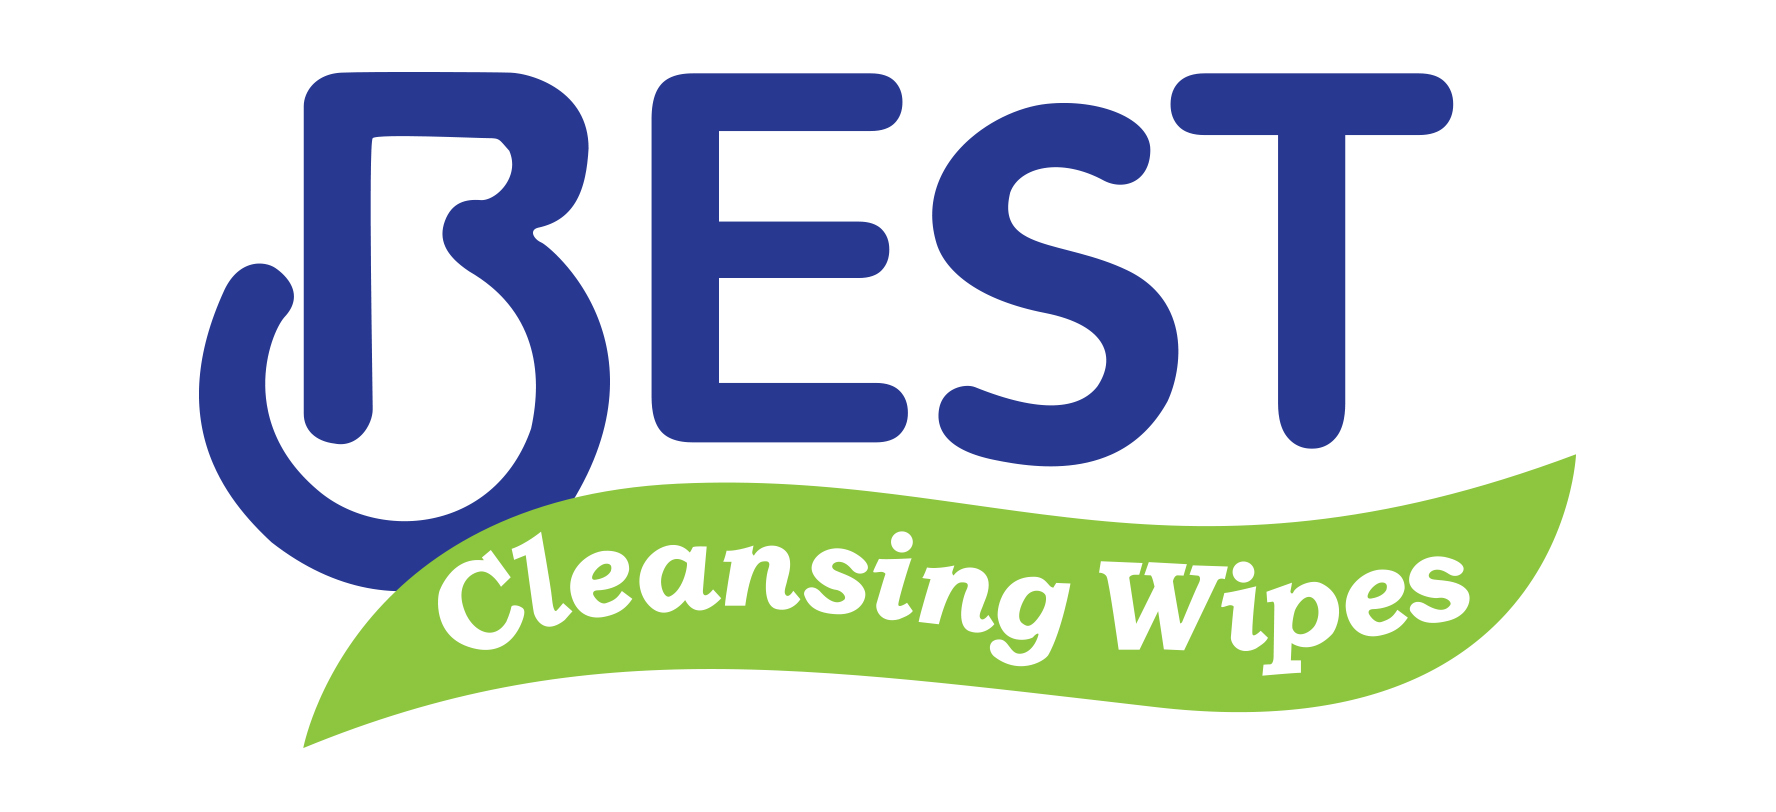 best wipes logo